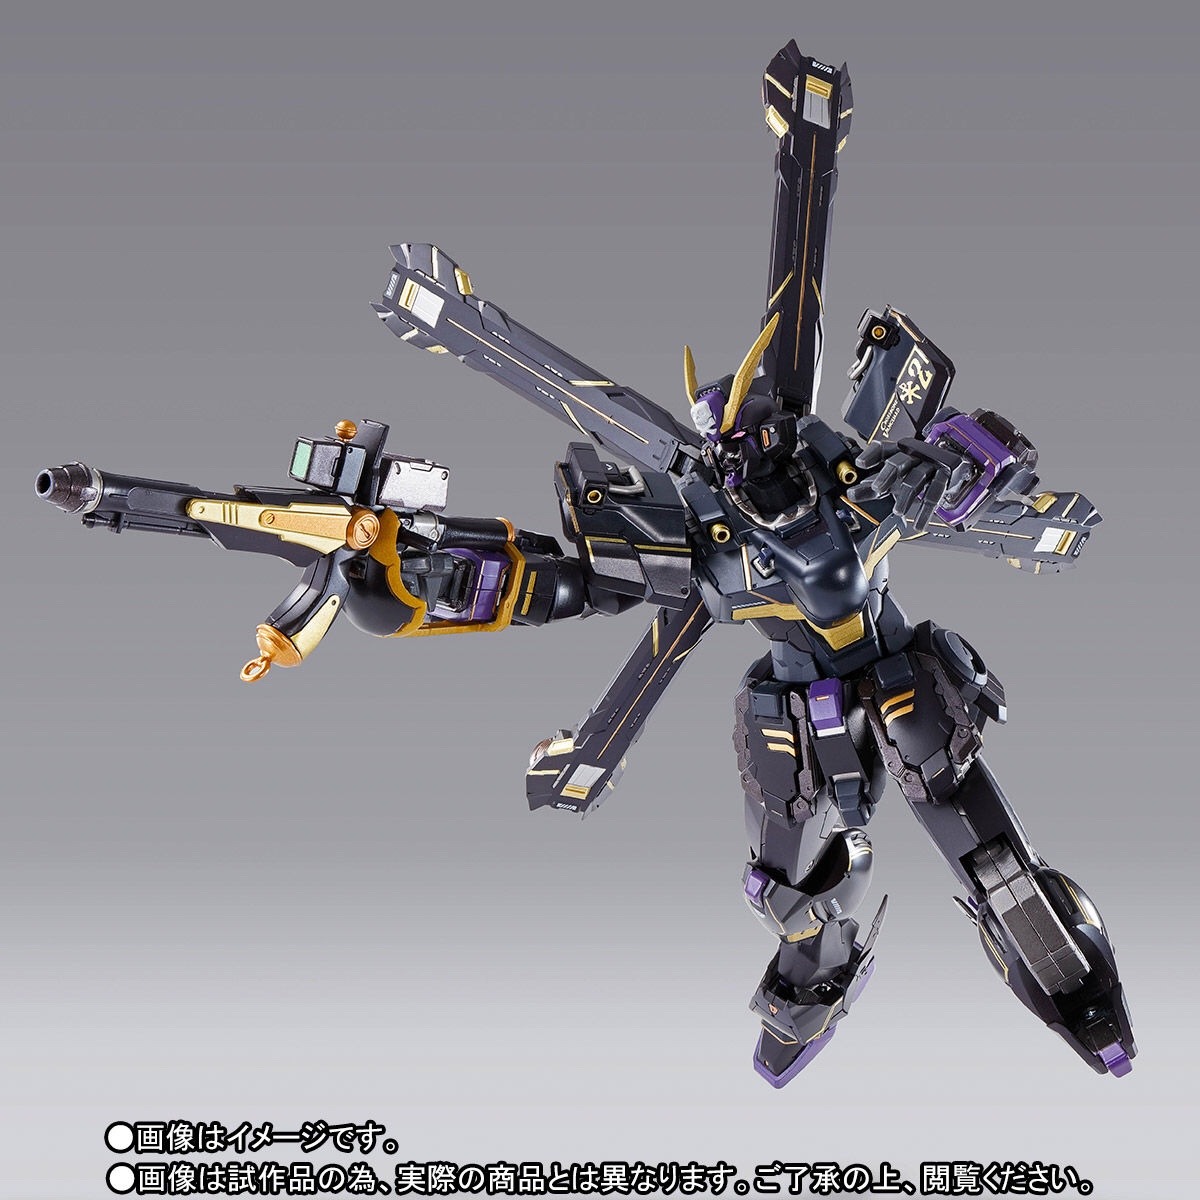 Rx 0 Unicorn Gundam Cgue 515 Hguc クロスボーン ガンダムx2 レビュー おもちゃ